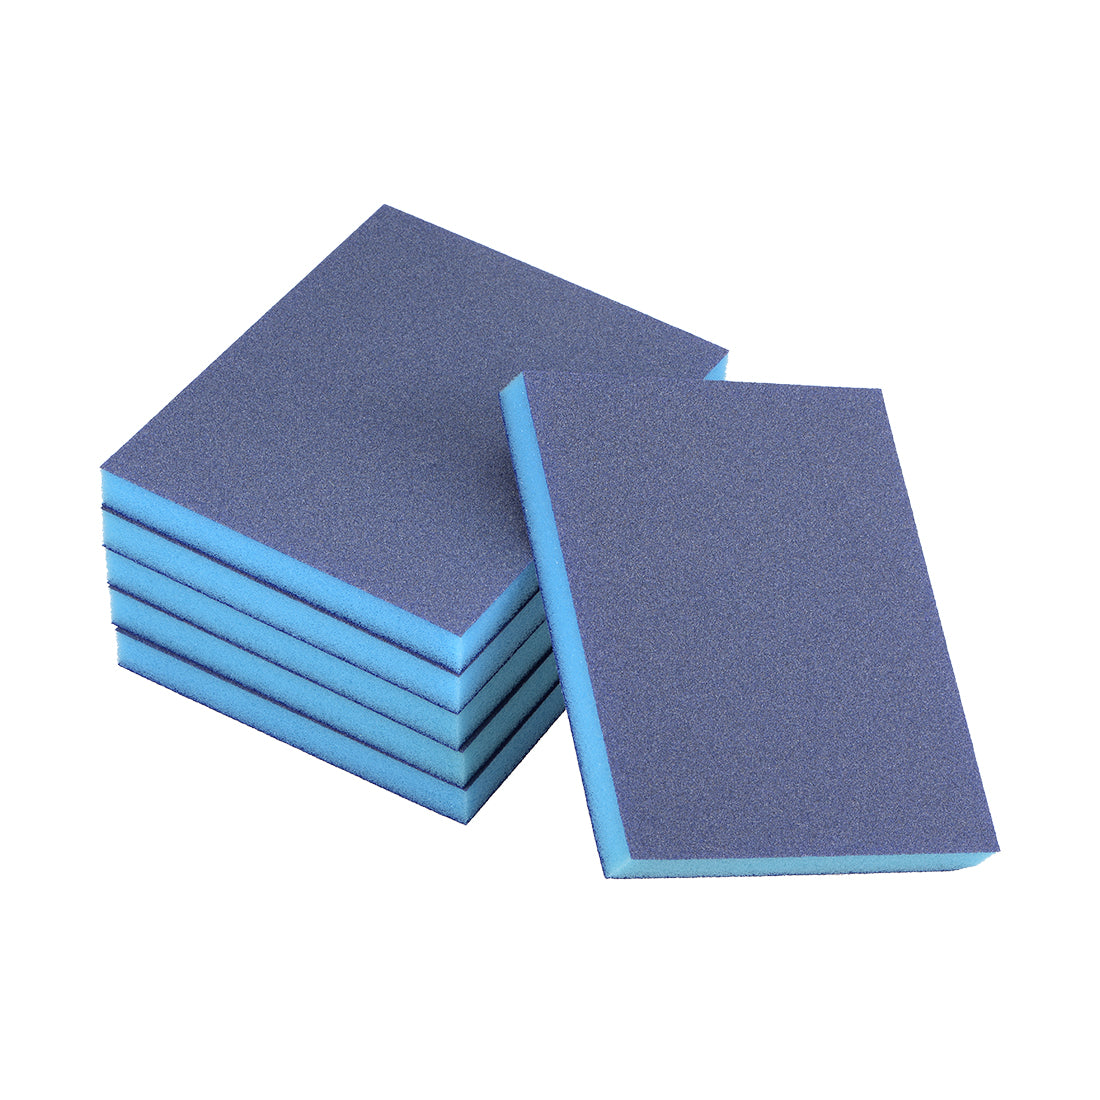 uxcell Uxcell Sanding Sponge 180 Grit Sanding Block Pad 4.7inch x 3.9inch x 0.4inch Blue 6pcs